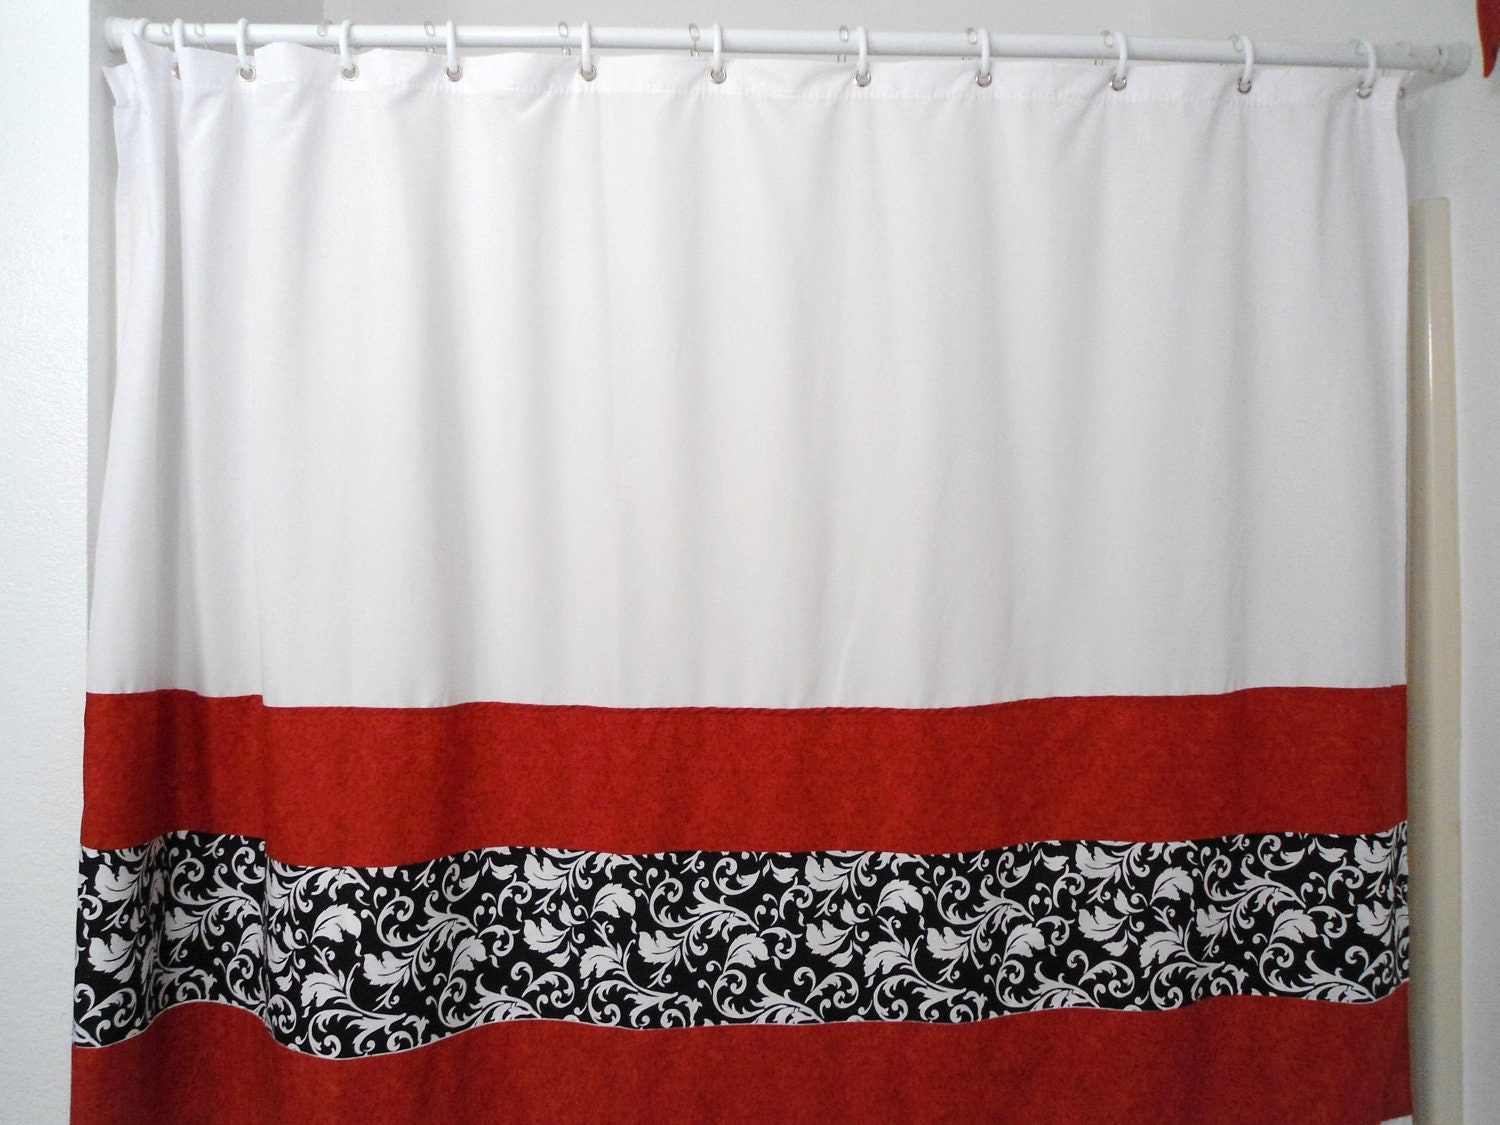 Shower CurtainWhite with Black and White Damask and by DREAMATHEME